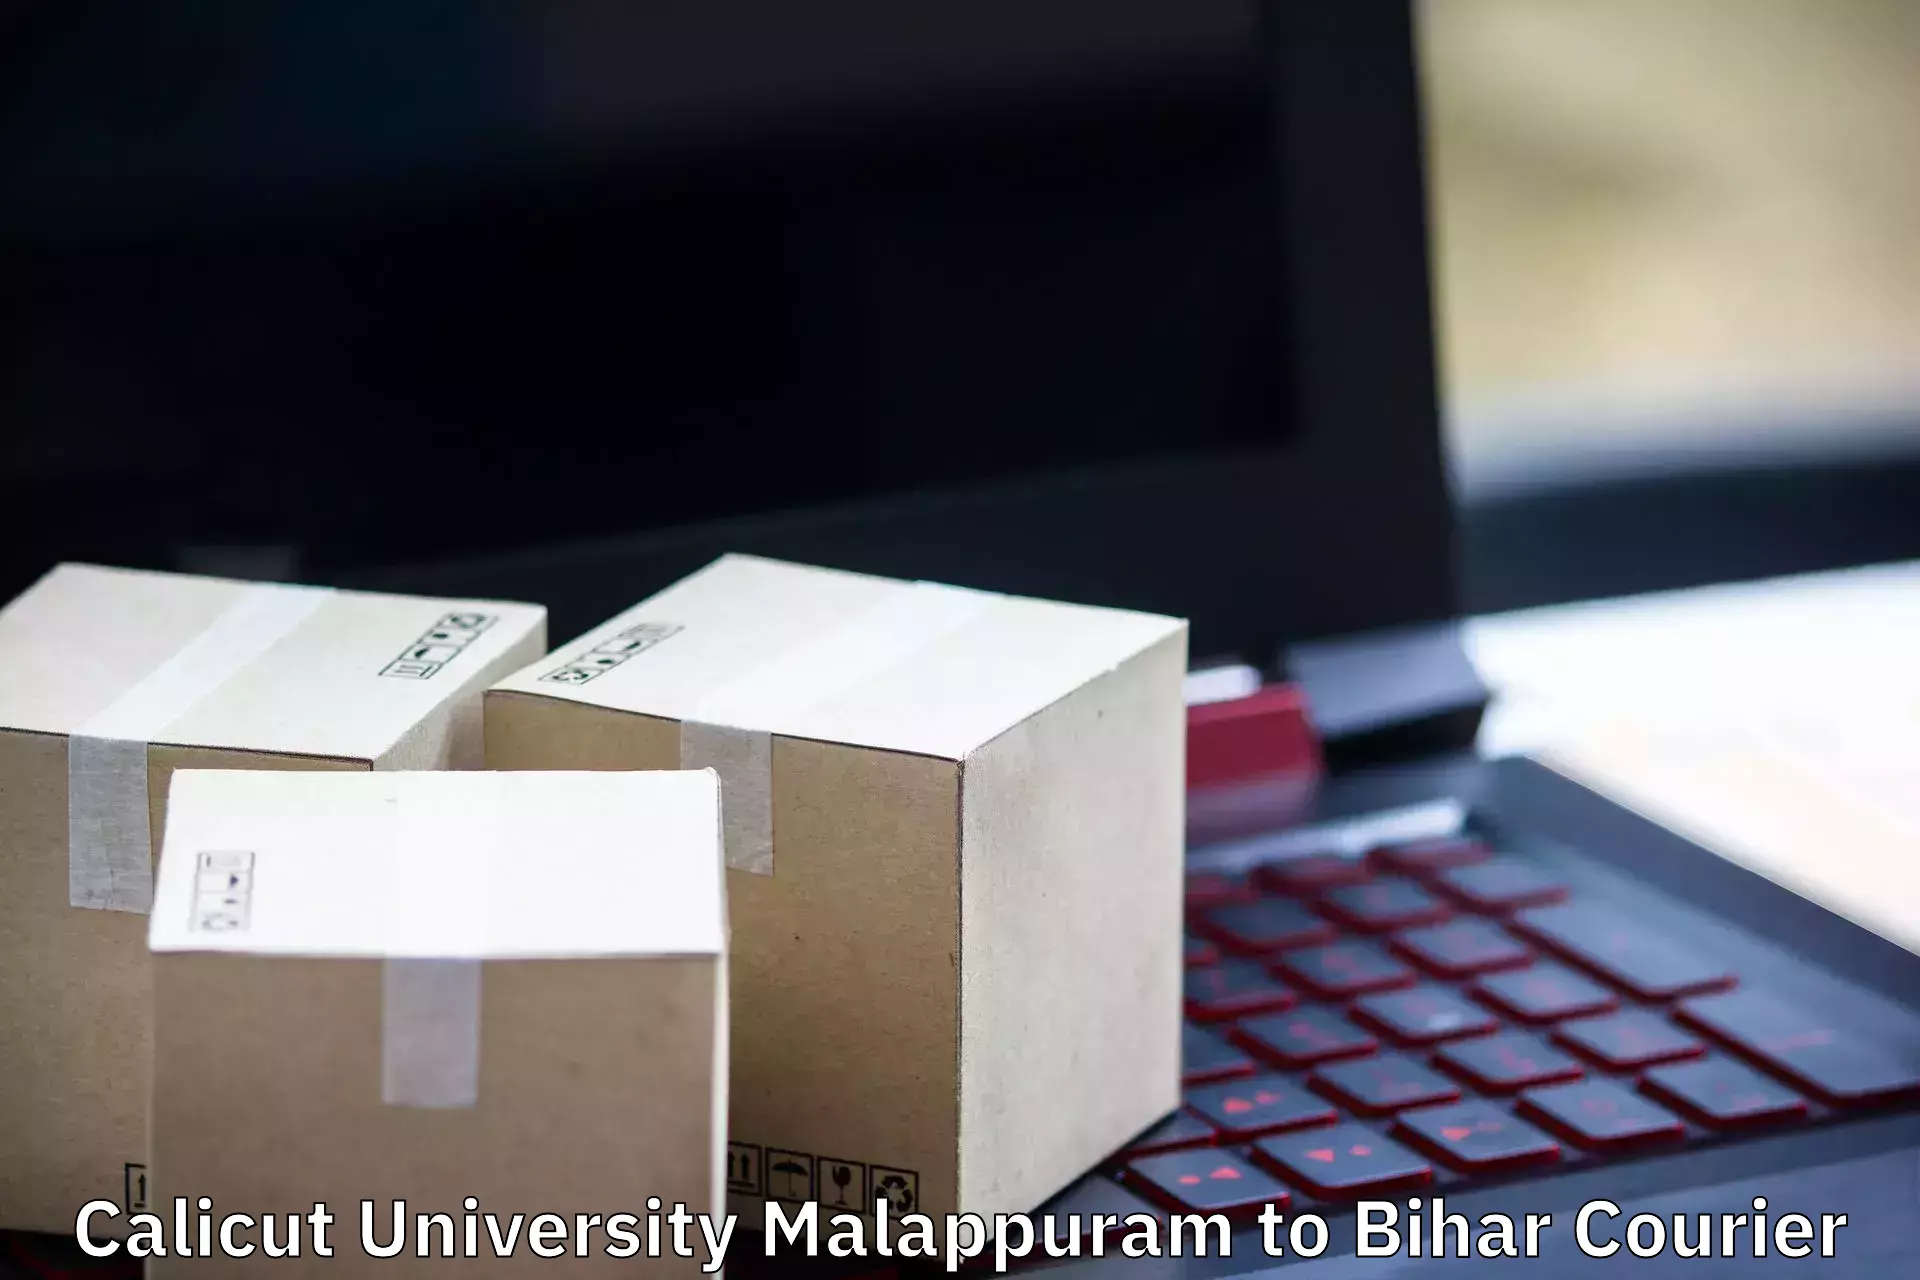 Furniture delivery service in Calicut University Malappuram to Bikramganj